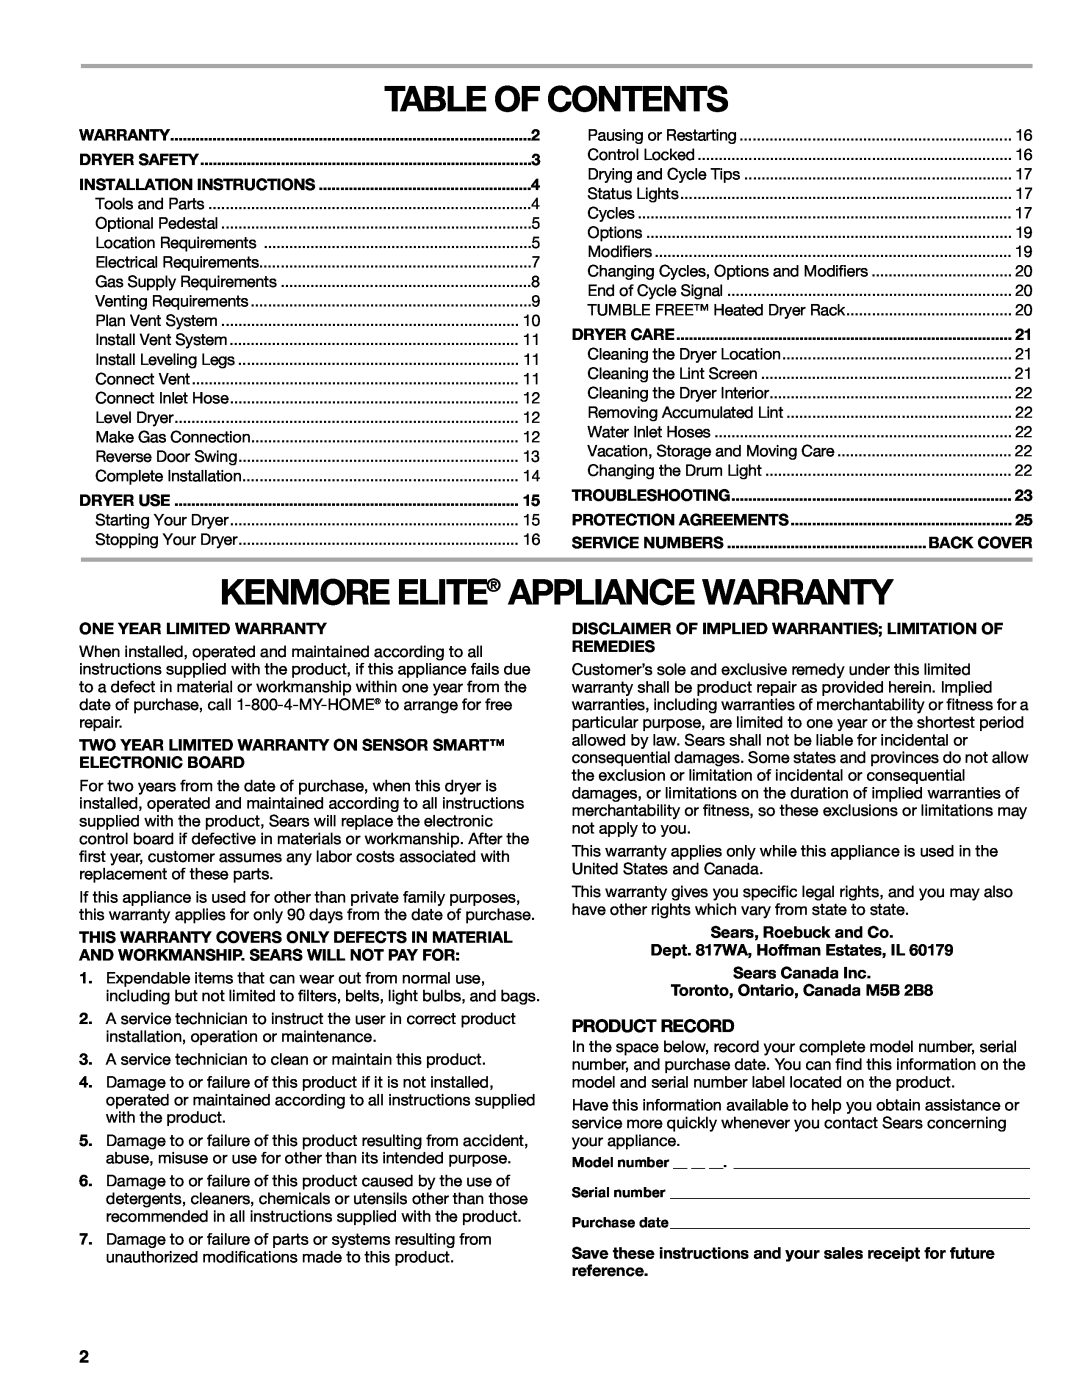 Suunto 110.9772 manual Table Of Contents, Kenmore Elite Appliance Warranty, Product Record 